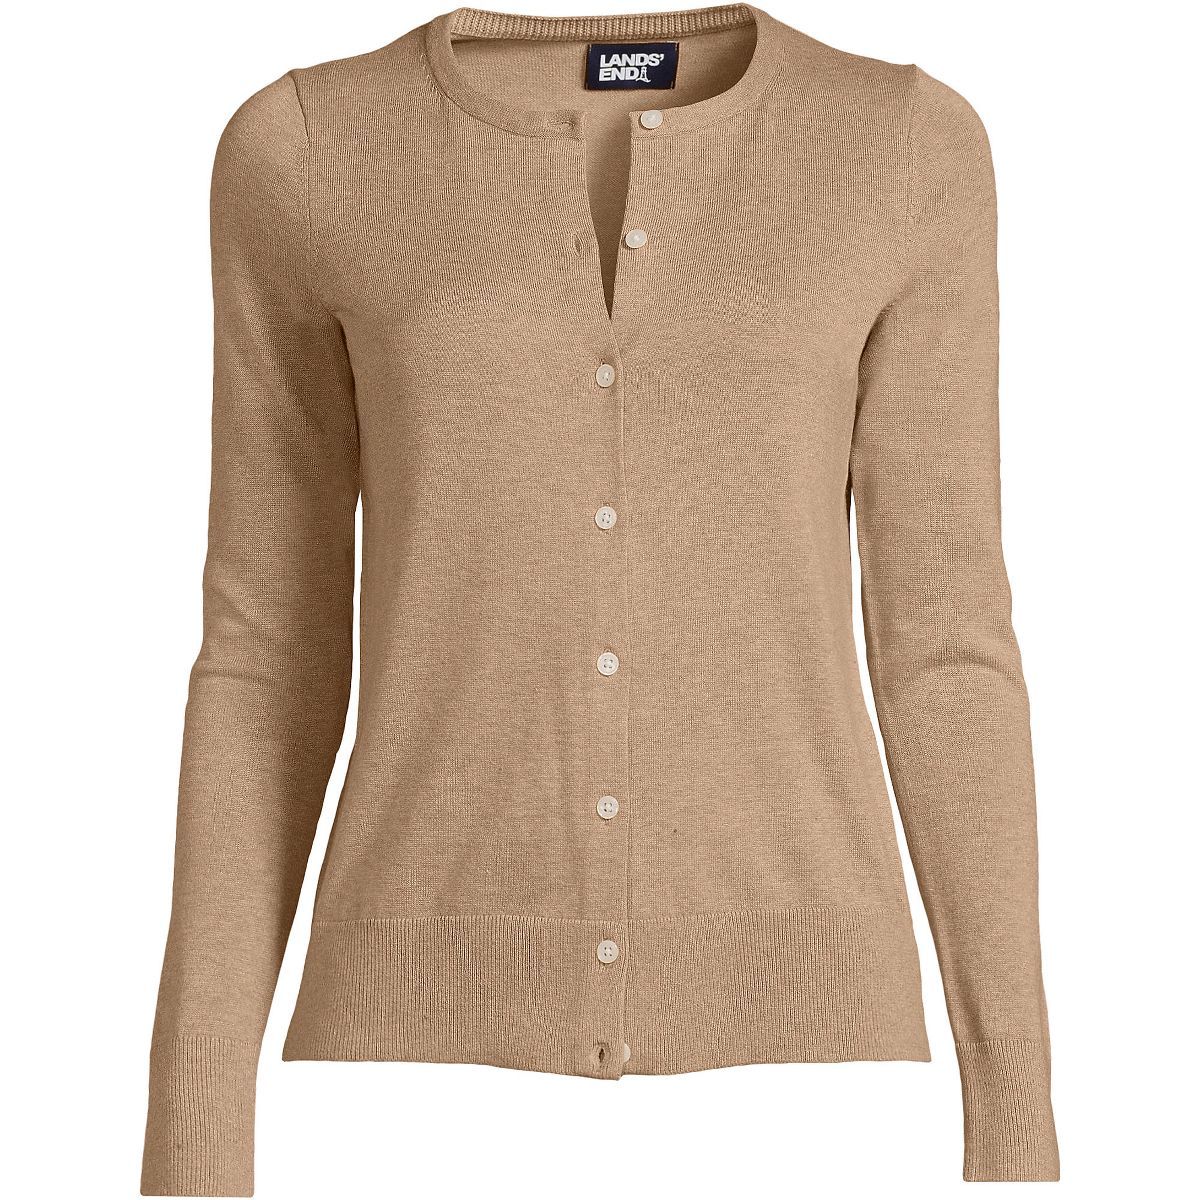 Lands' End Women's Fine Gauge Cotton Cardigan Sweater | Target